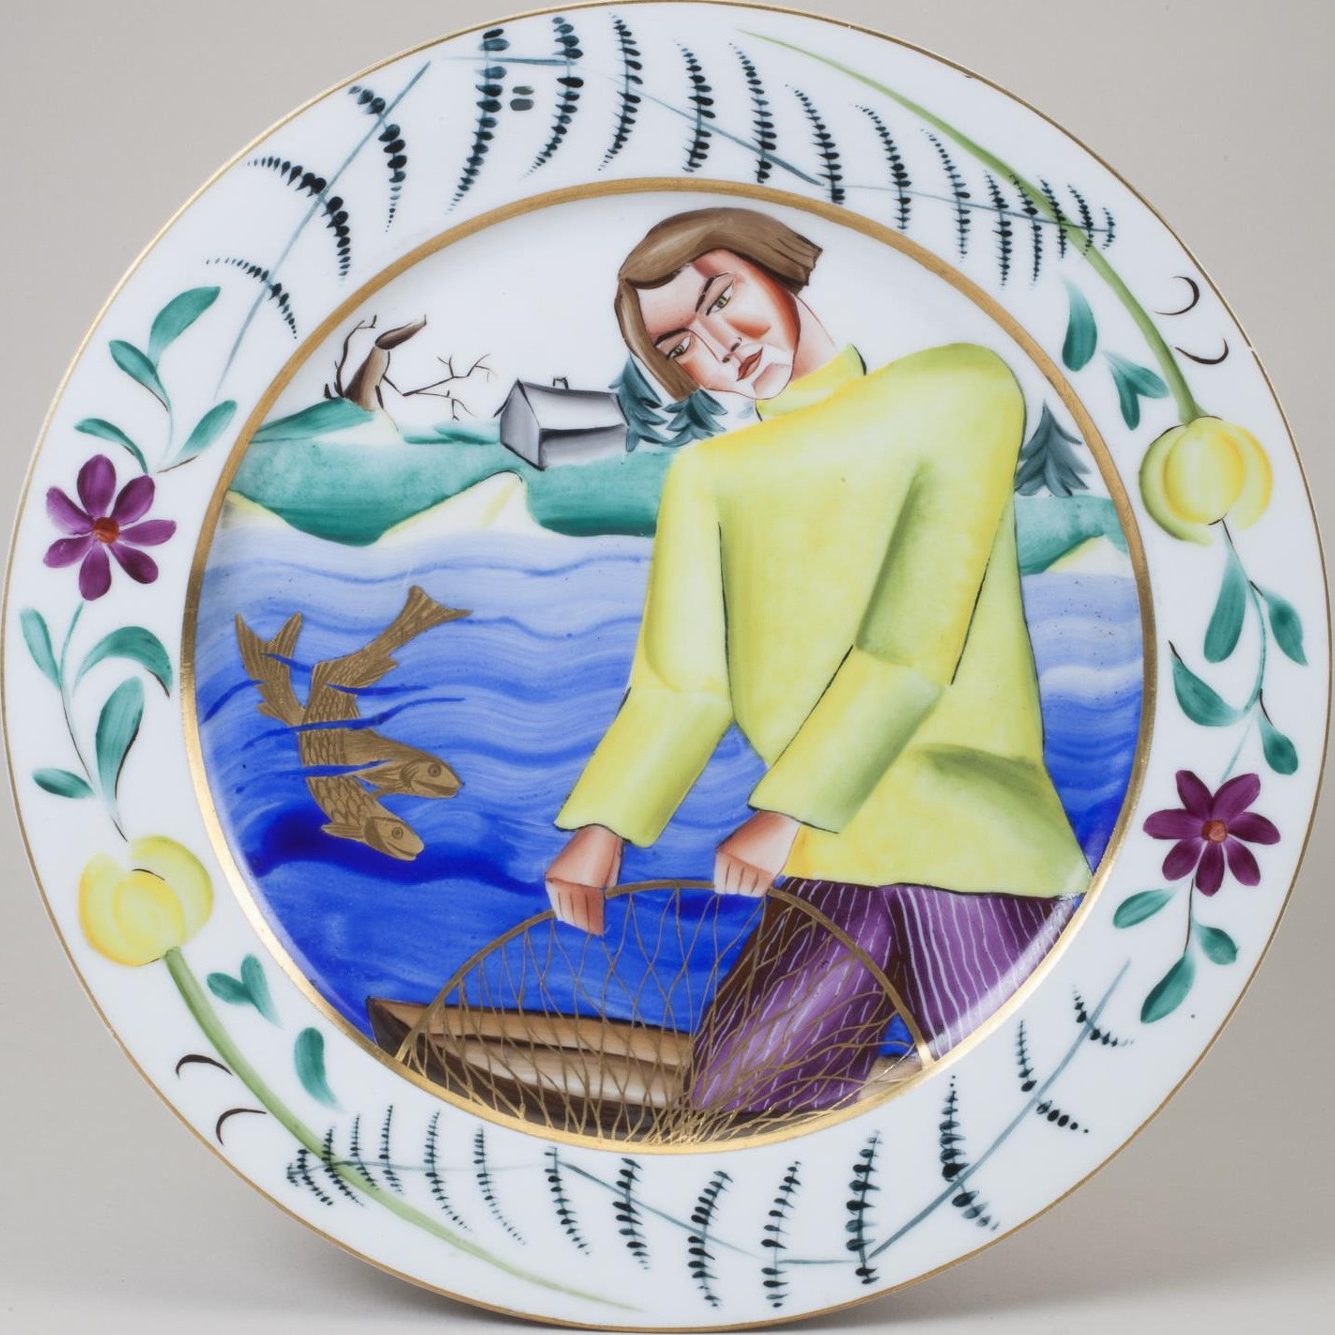 Soviet porcelain platter "Fisherman" by Rozendorf. State Porcelain Factory